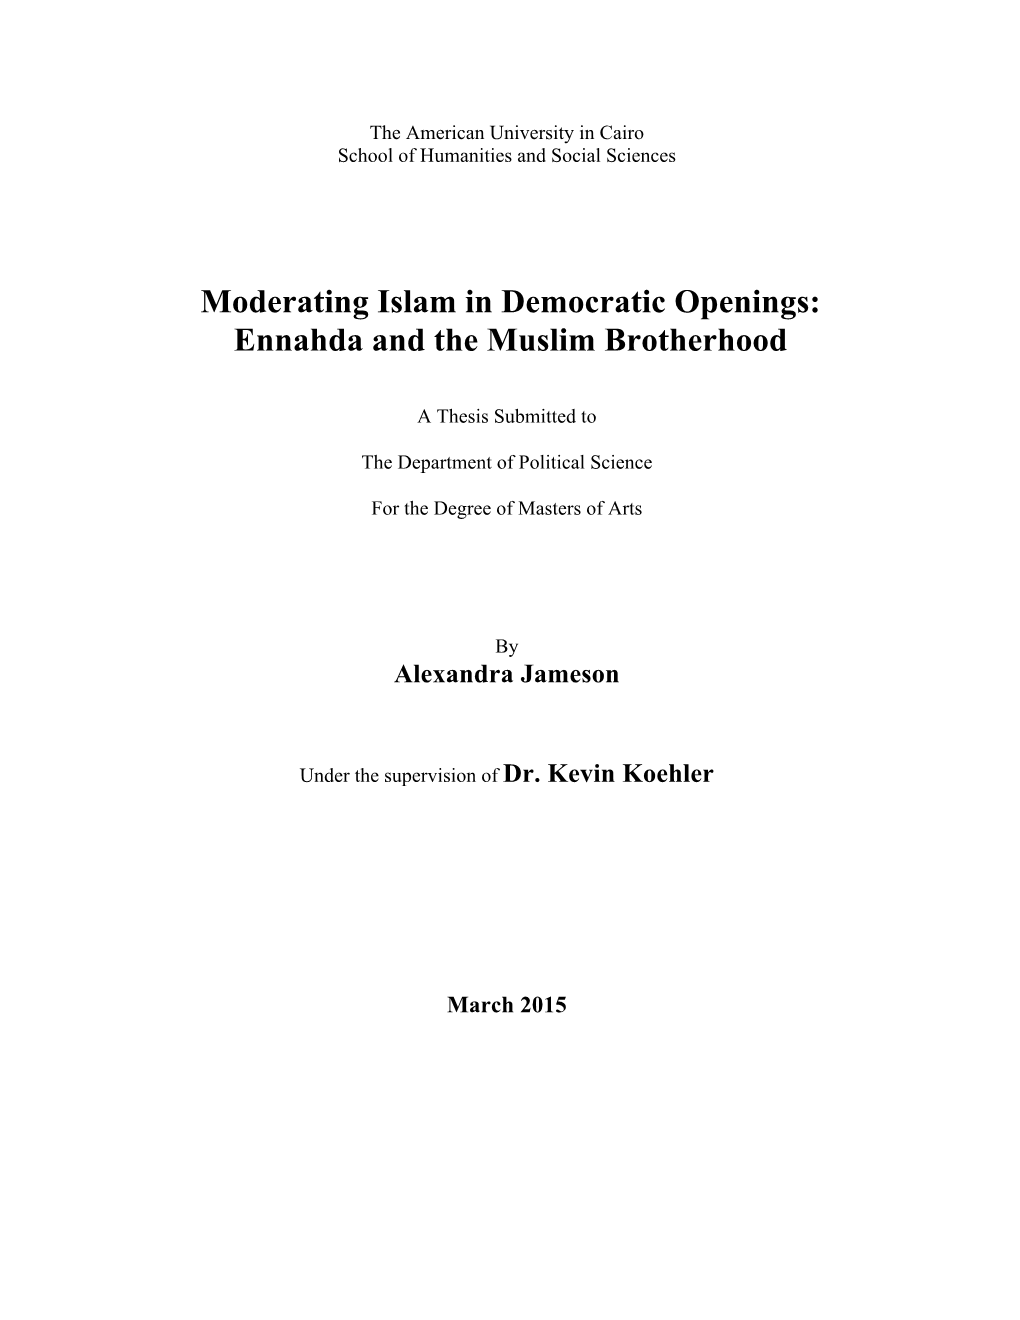 Ennahda and the Muslim Brotherhood